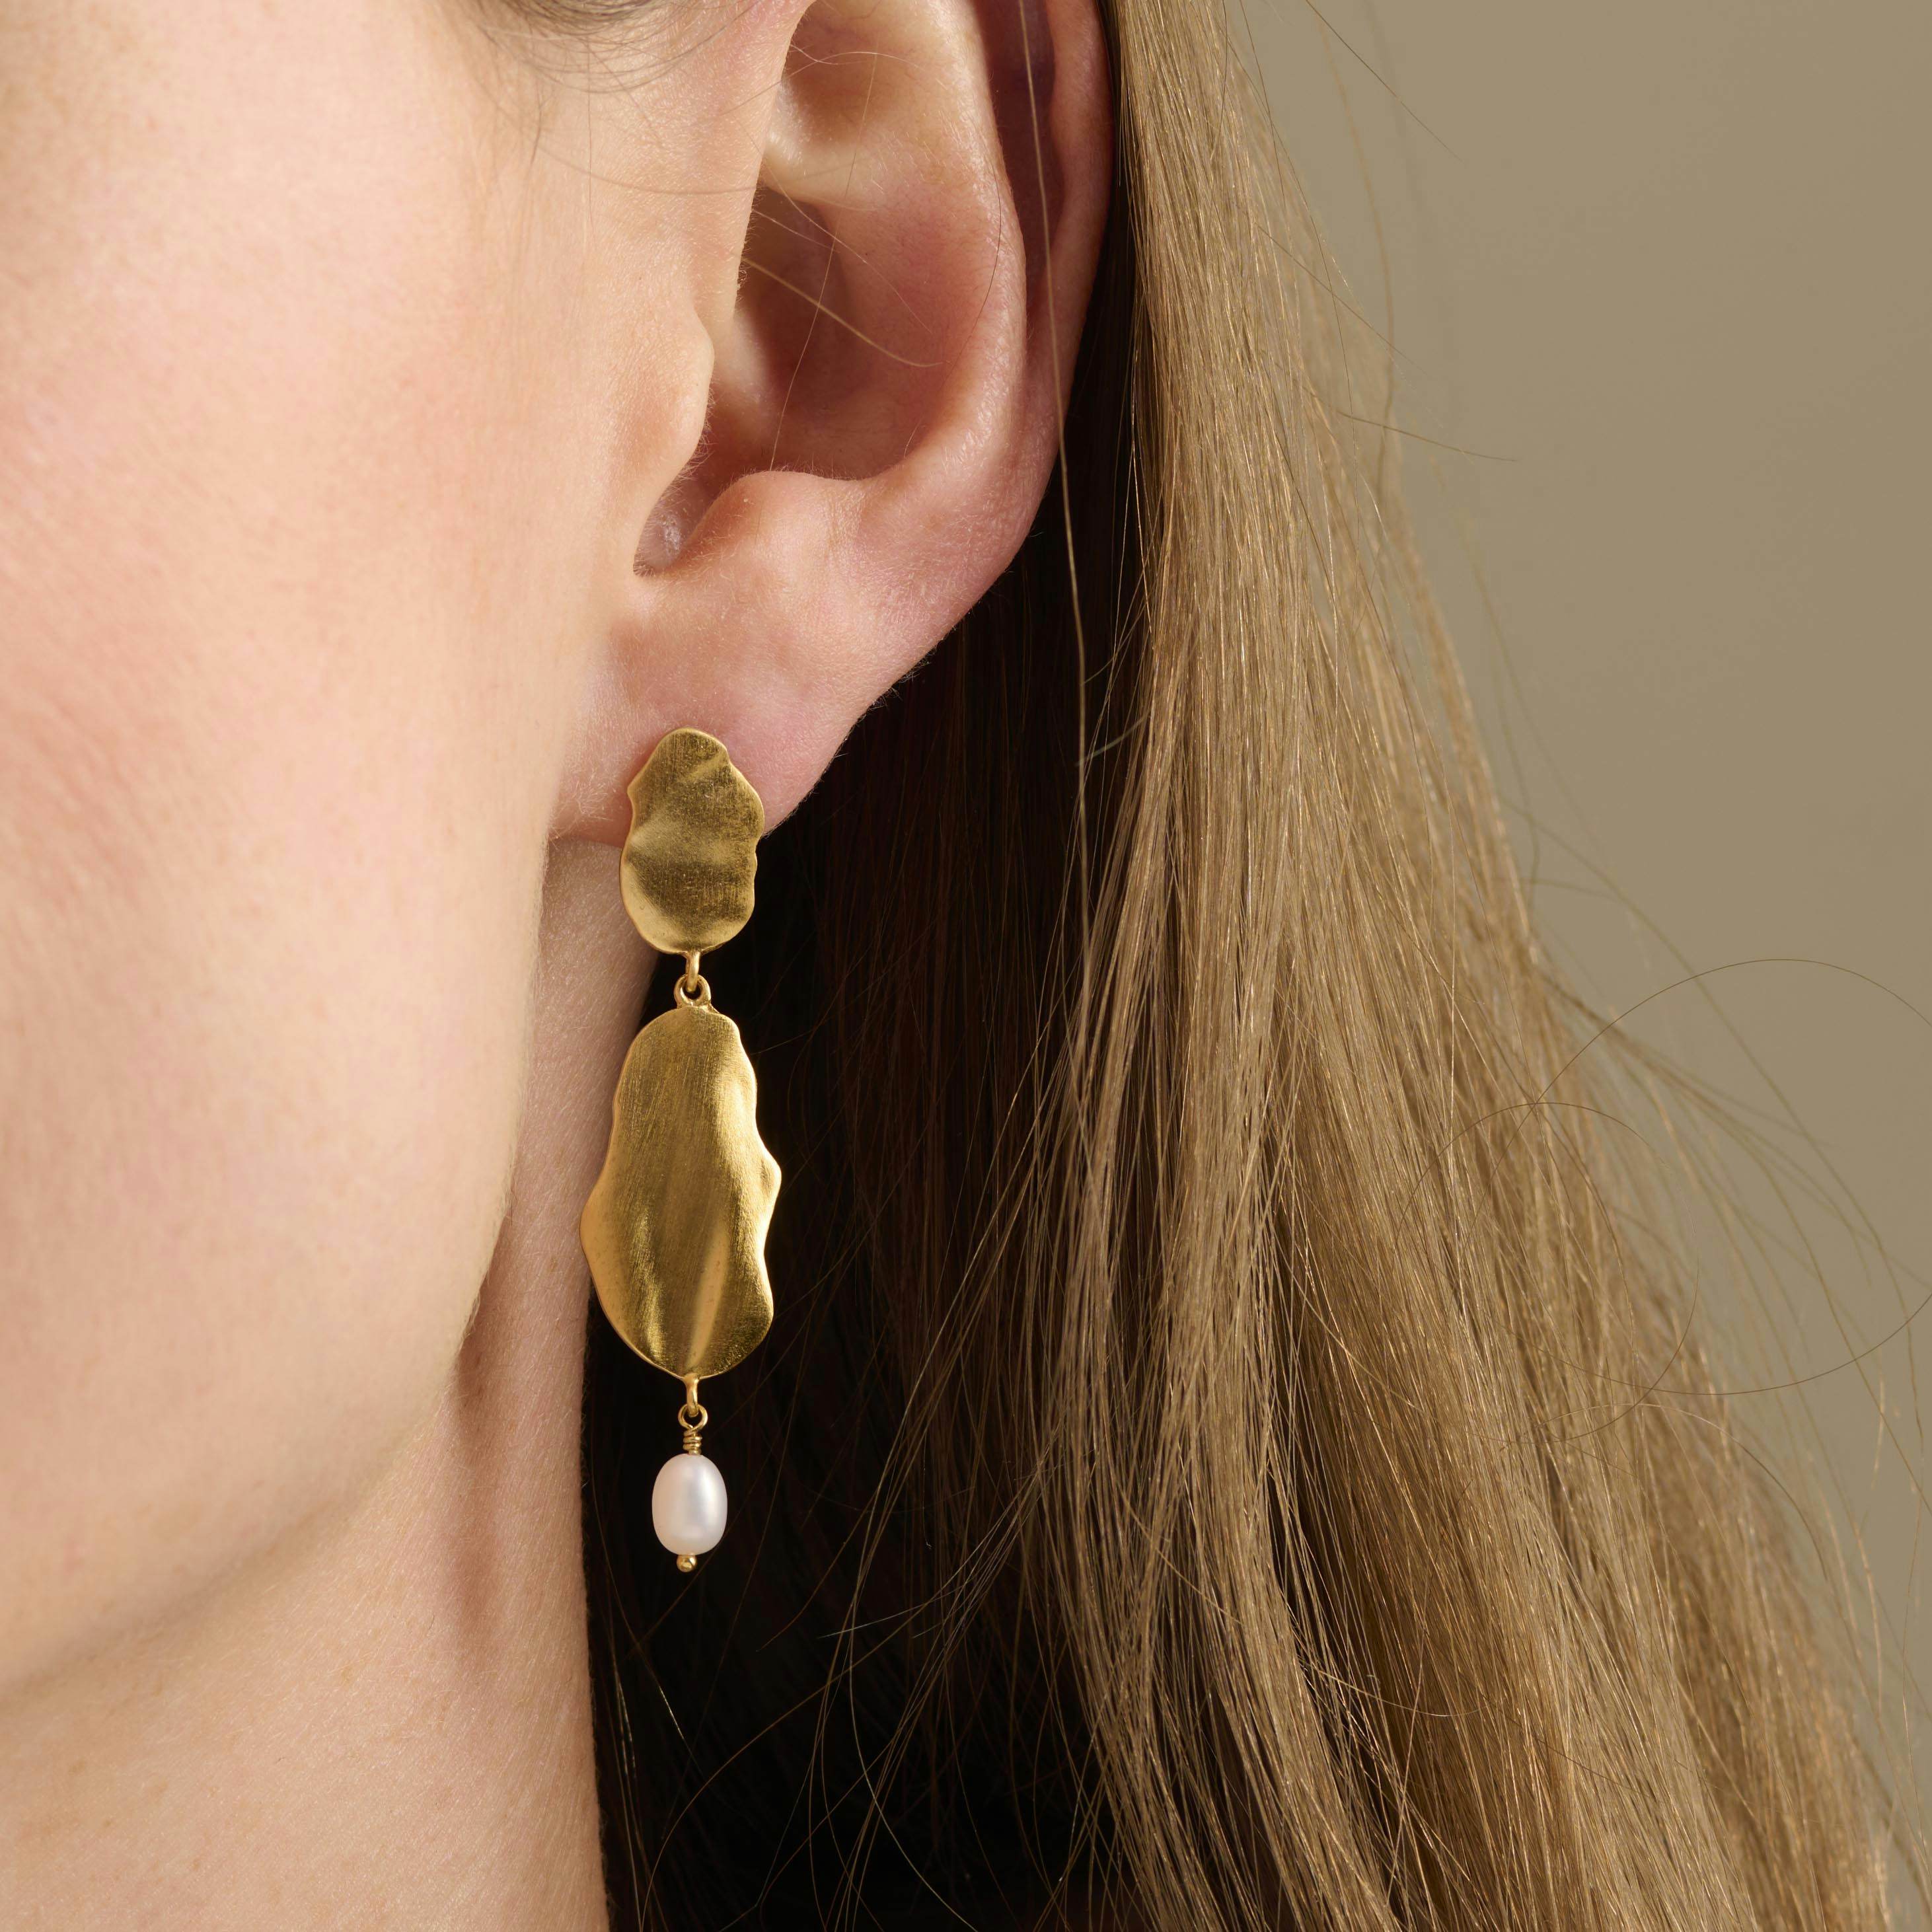 Drift Earrings from Pernille Corydon in Goldplated-Silver Sterling 925